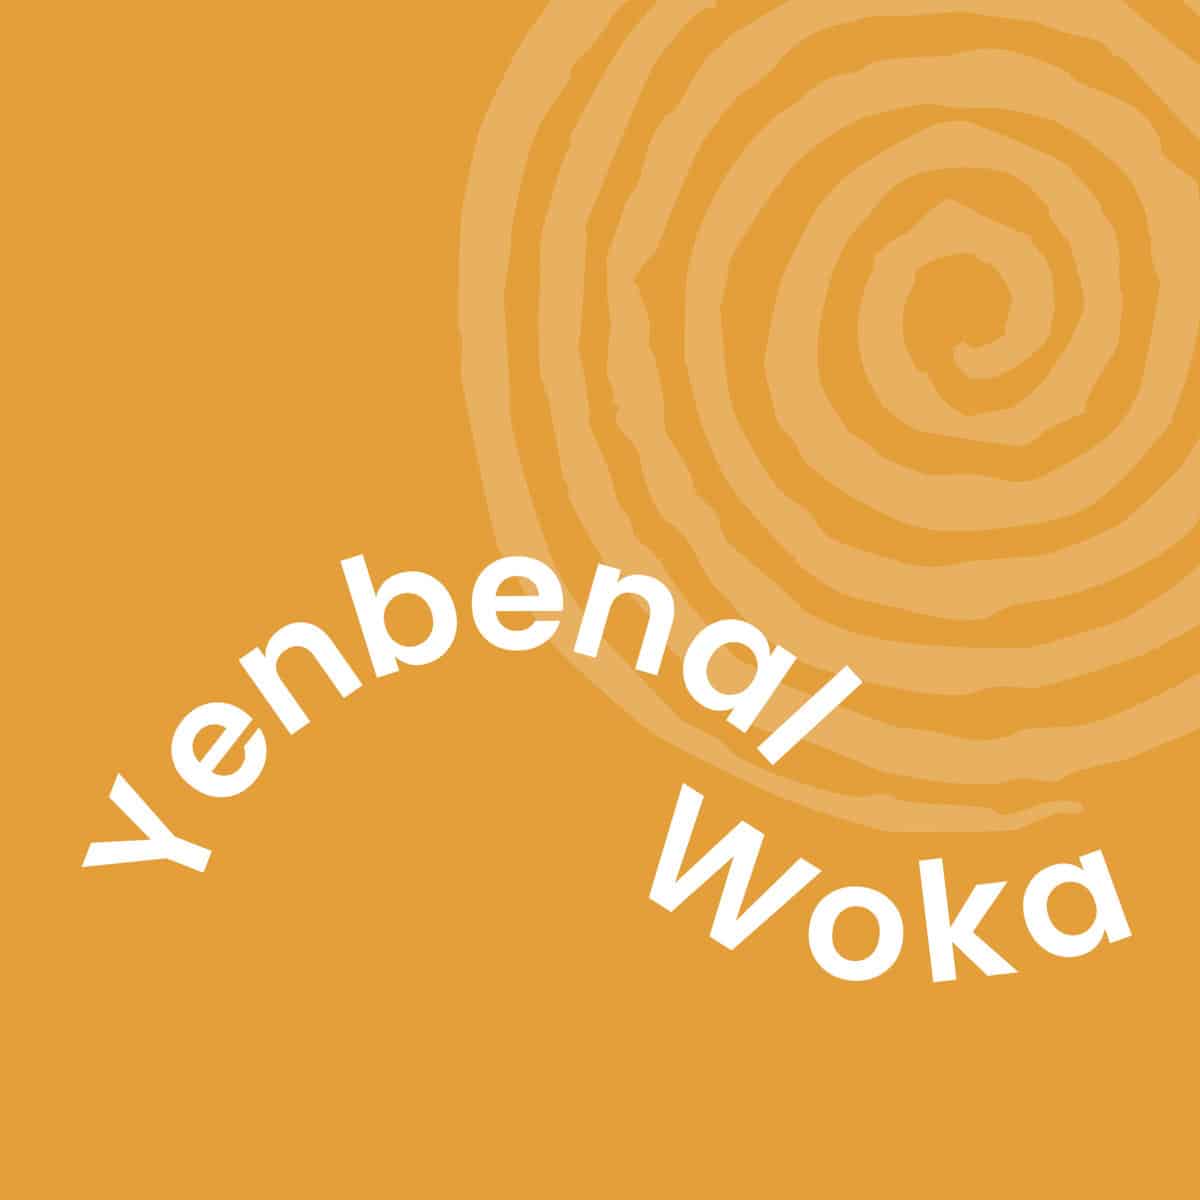 Yenbenal Woka Social media squares2 no text